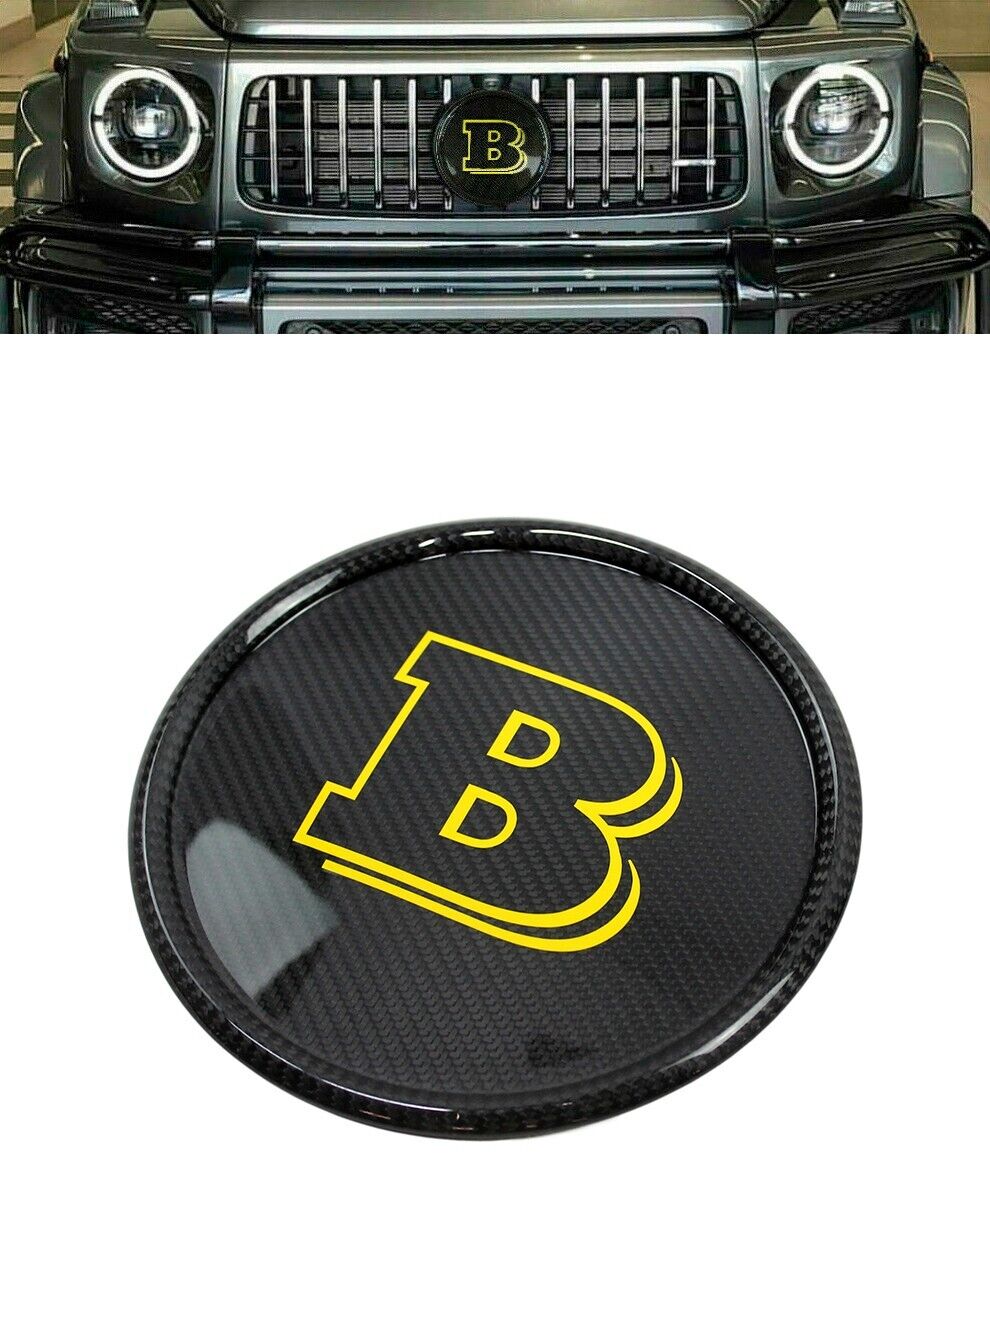 G Wagon Carbon Fiber Badge Grille Emblem Brabus Style fits W463A W464 2019+